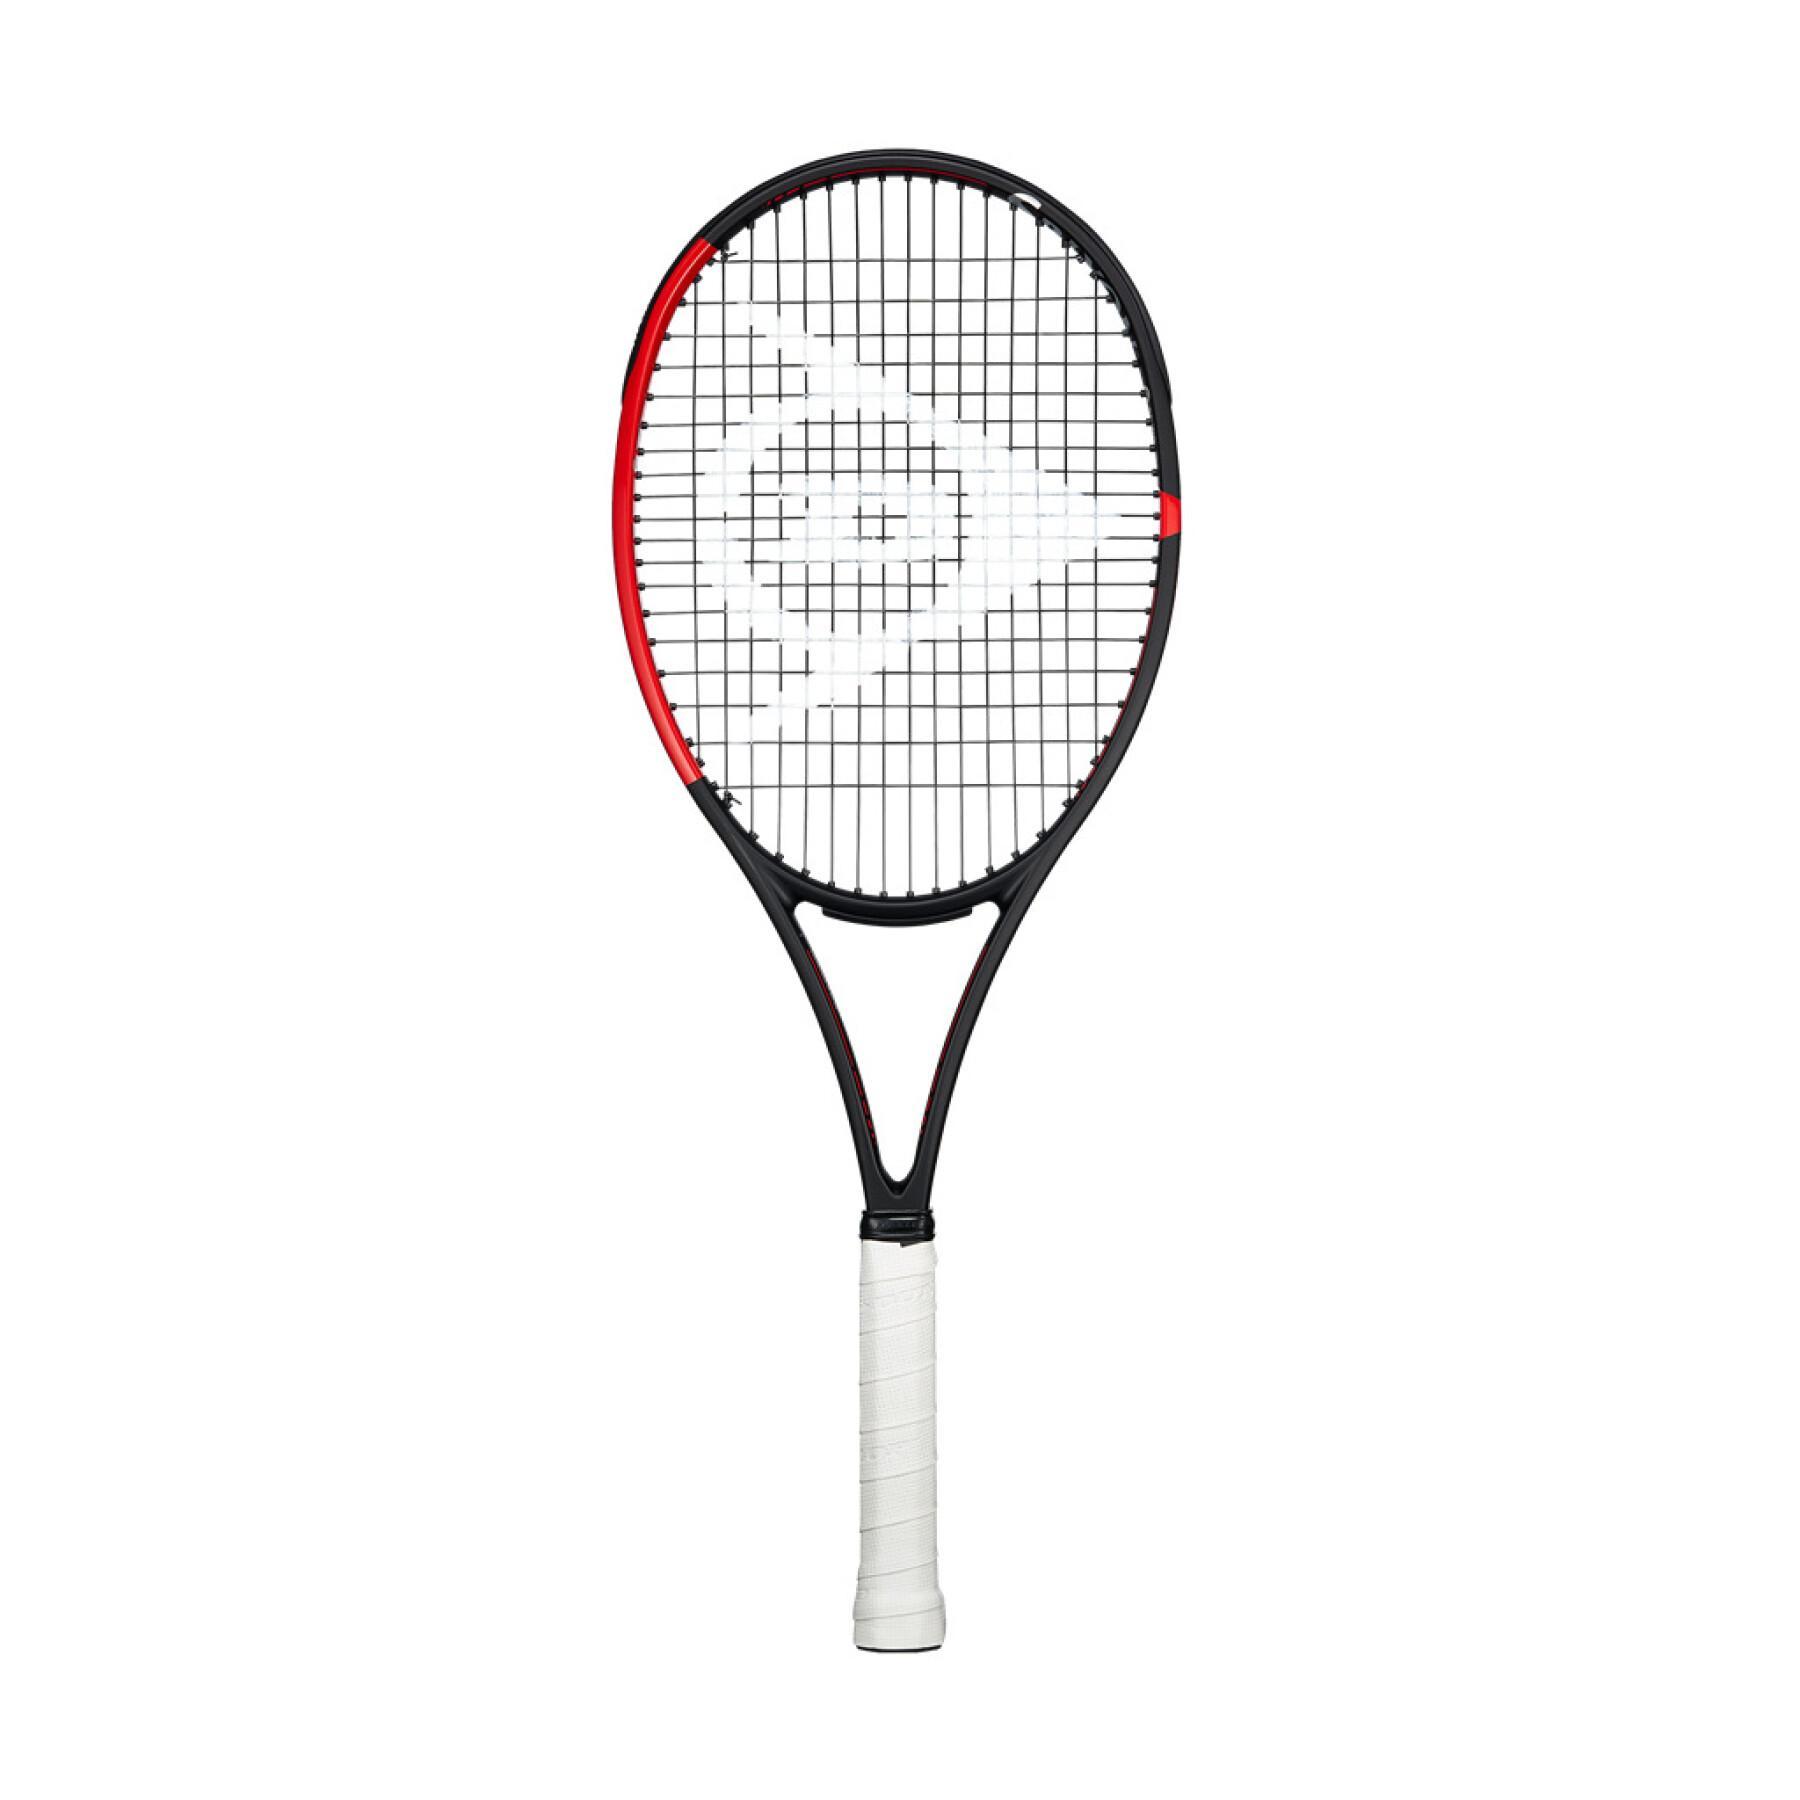 Racket Dunlop n 19 cx 200 ls g2